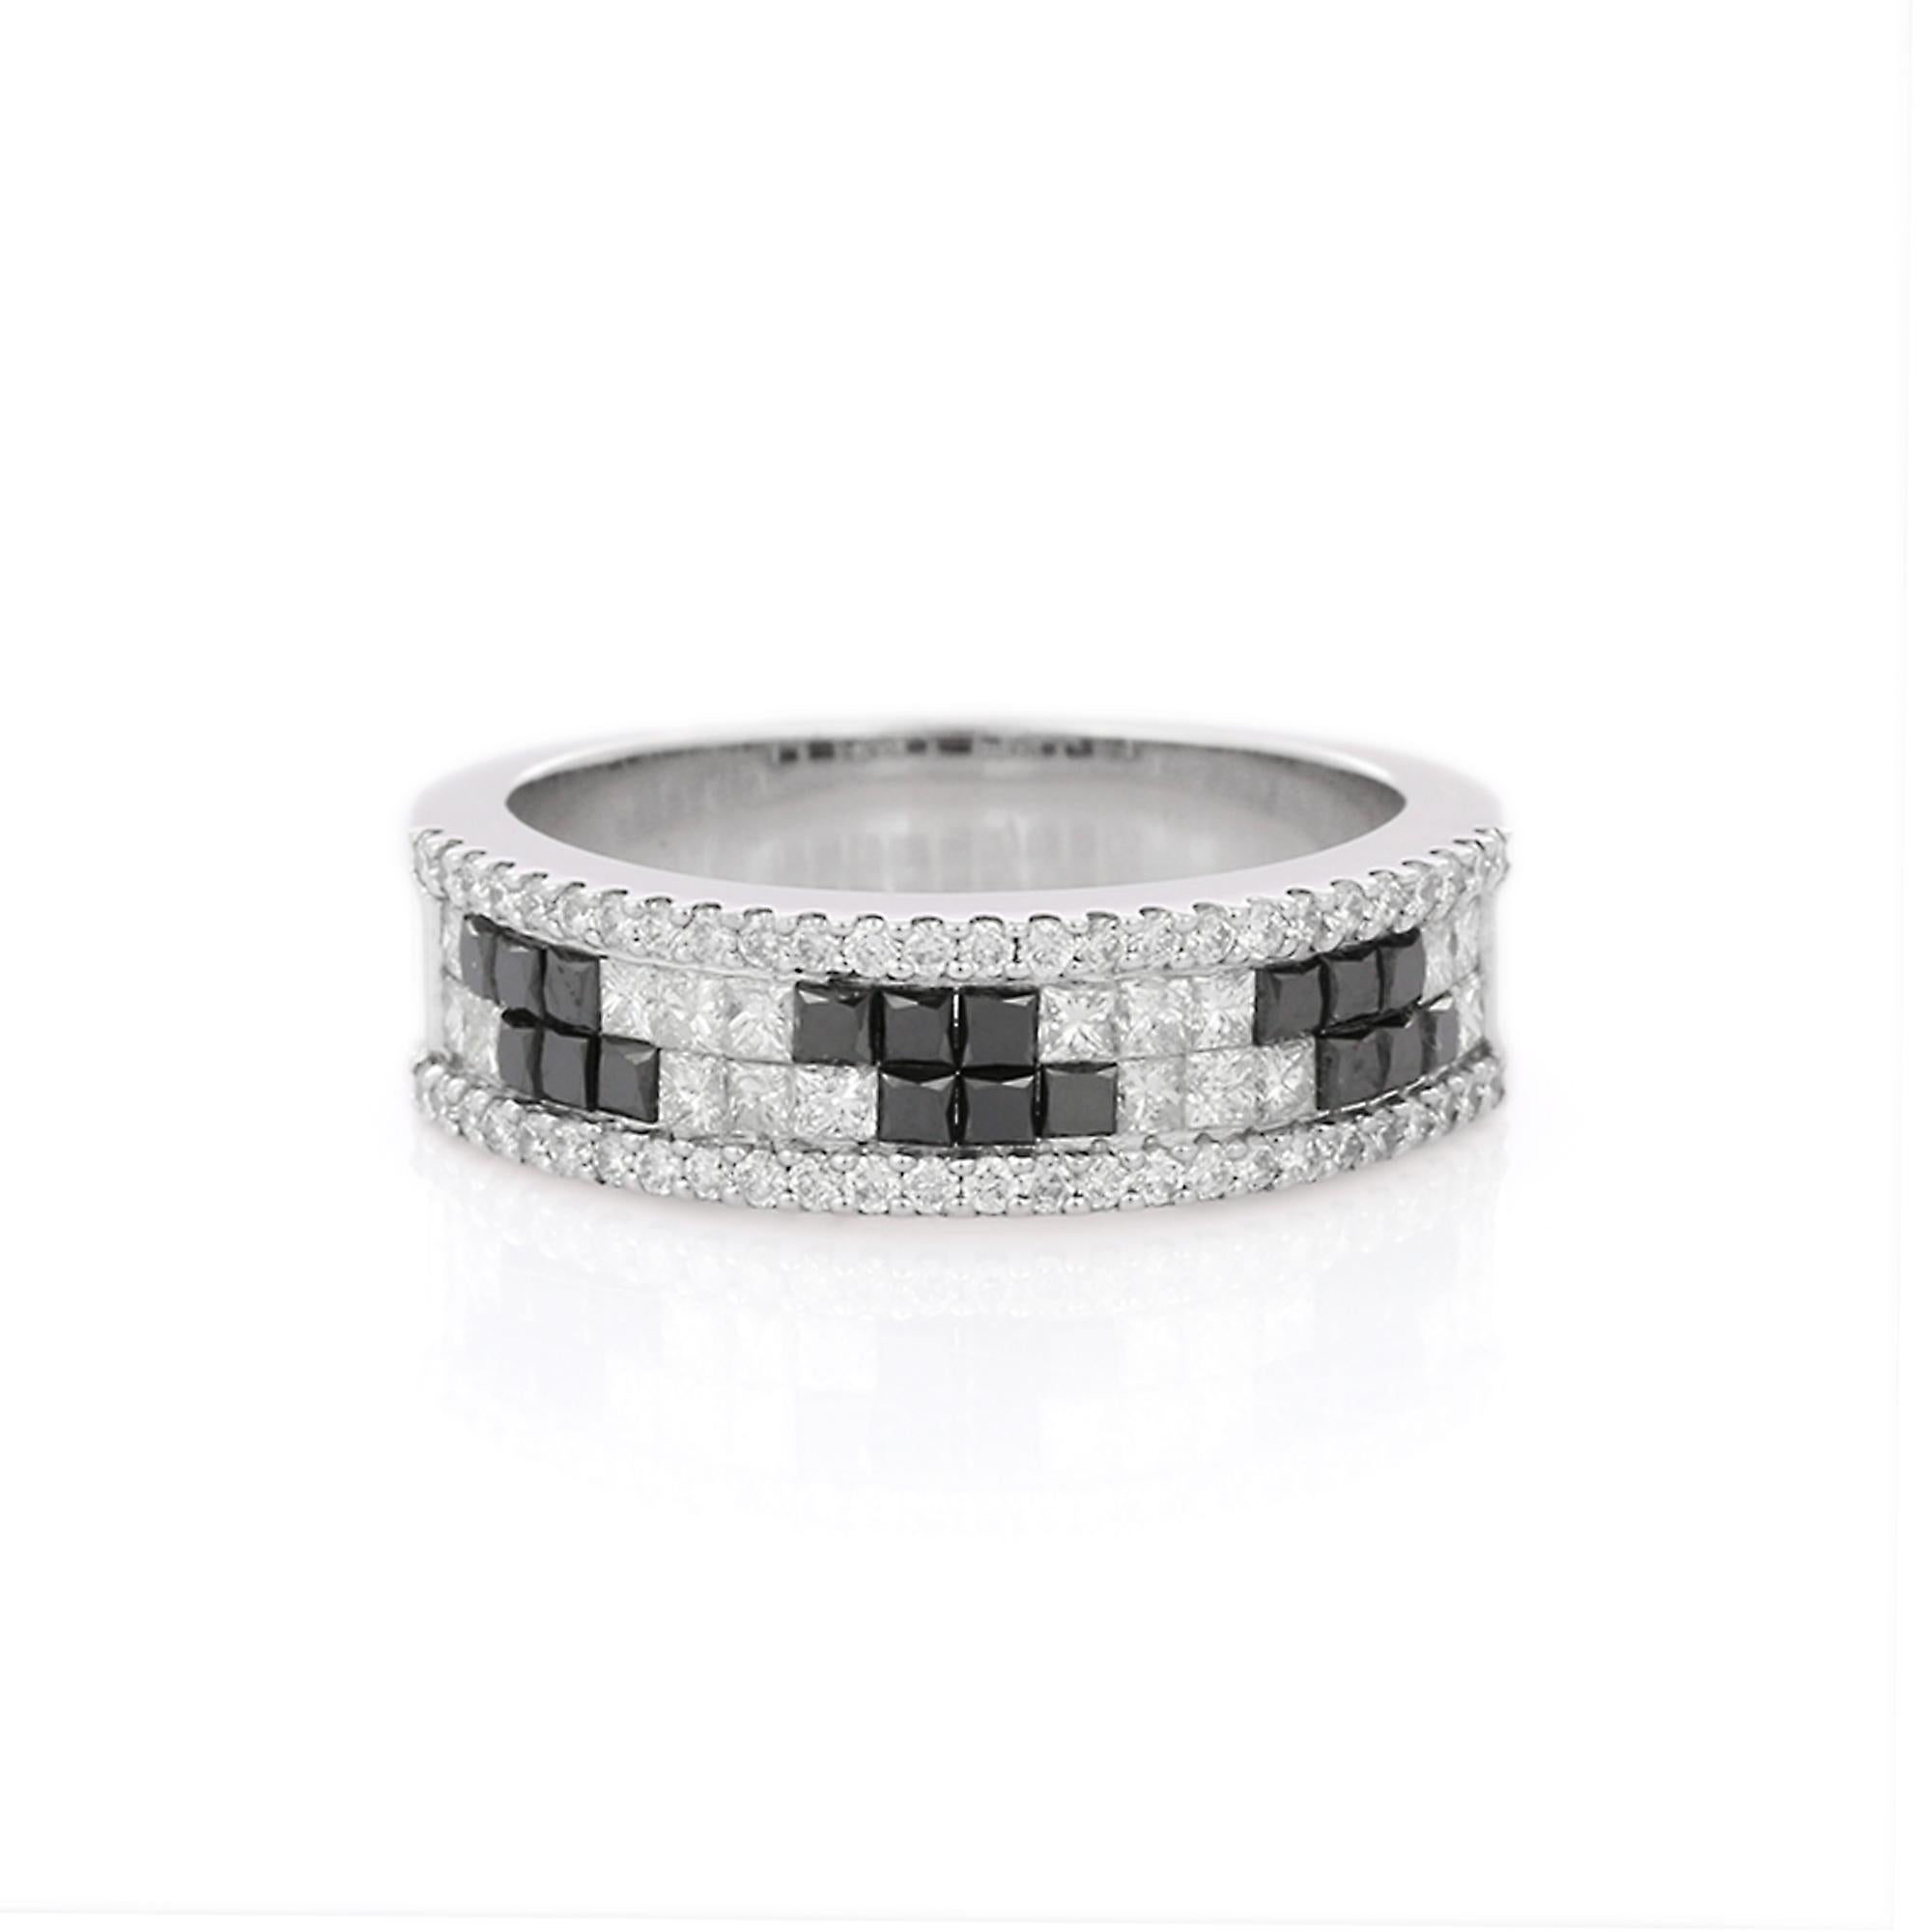 For Sale:  Unisex Black White Diamond Engagement Band Ring in 18K White Gold  5